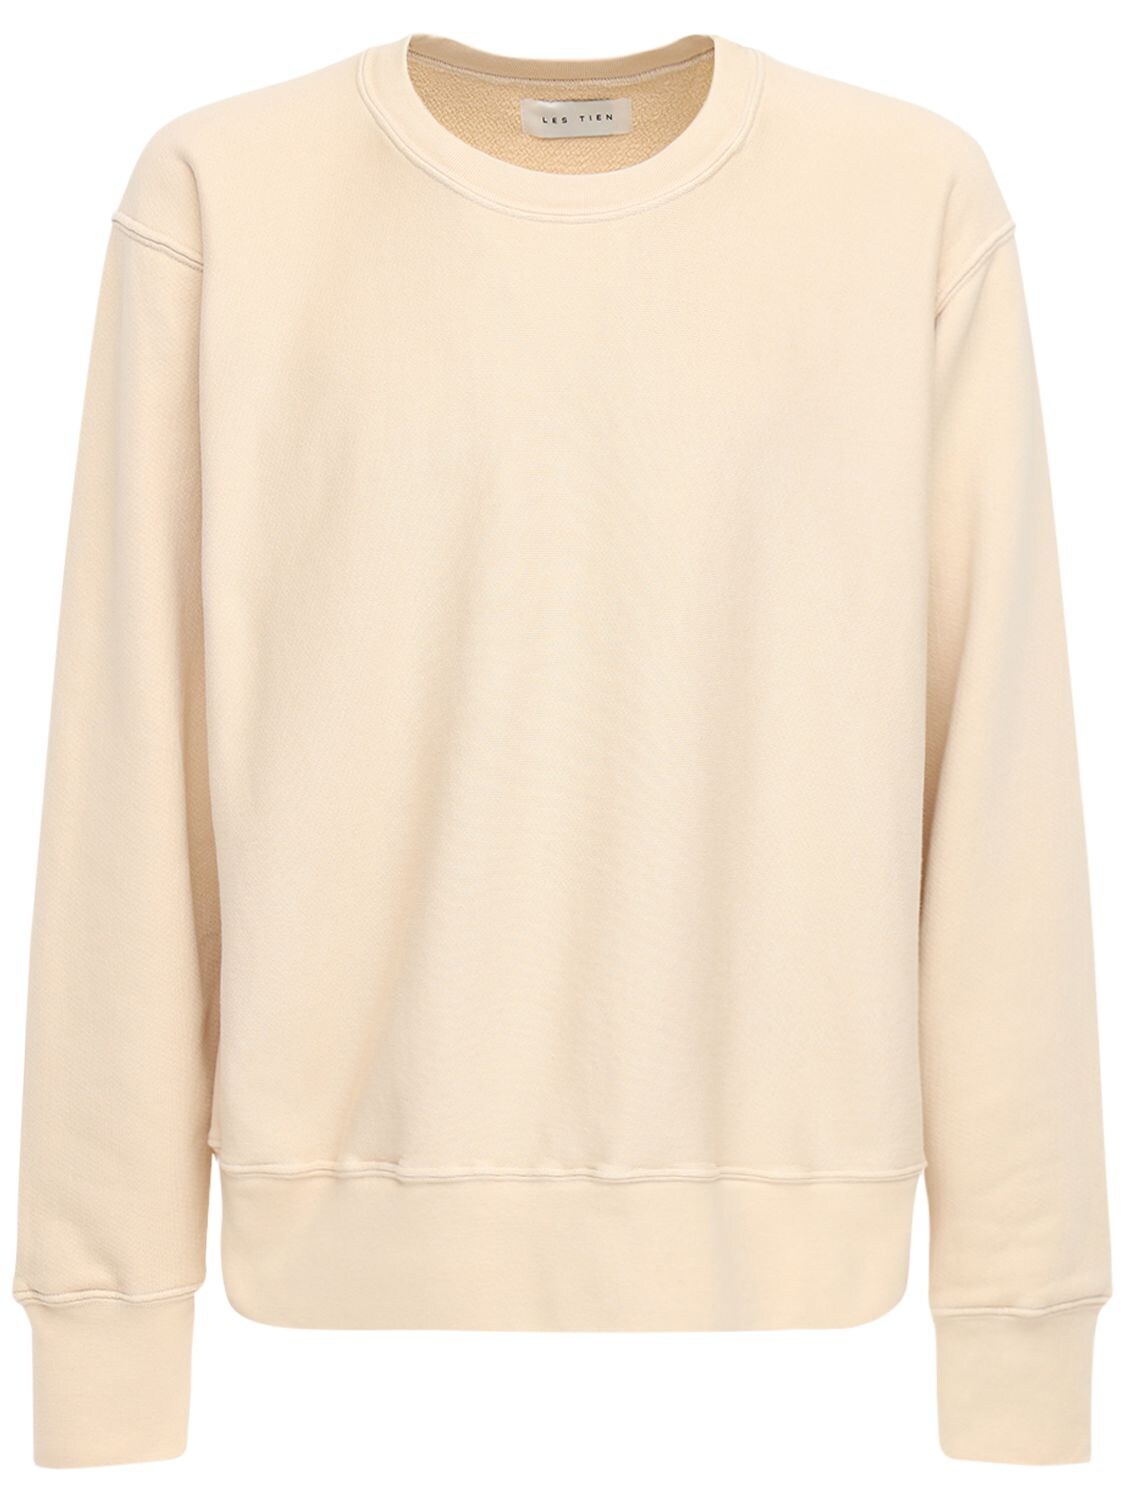 Les Tien Cropped Cotton Sweatshirt In Beige